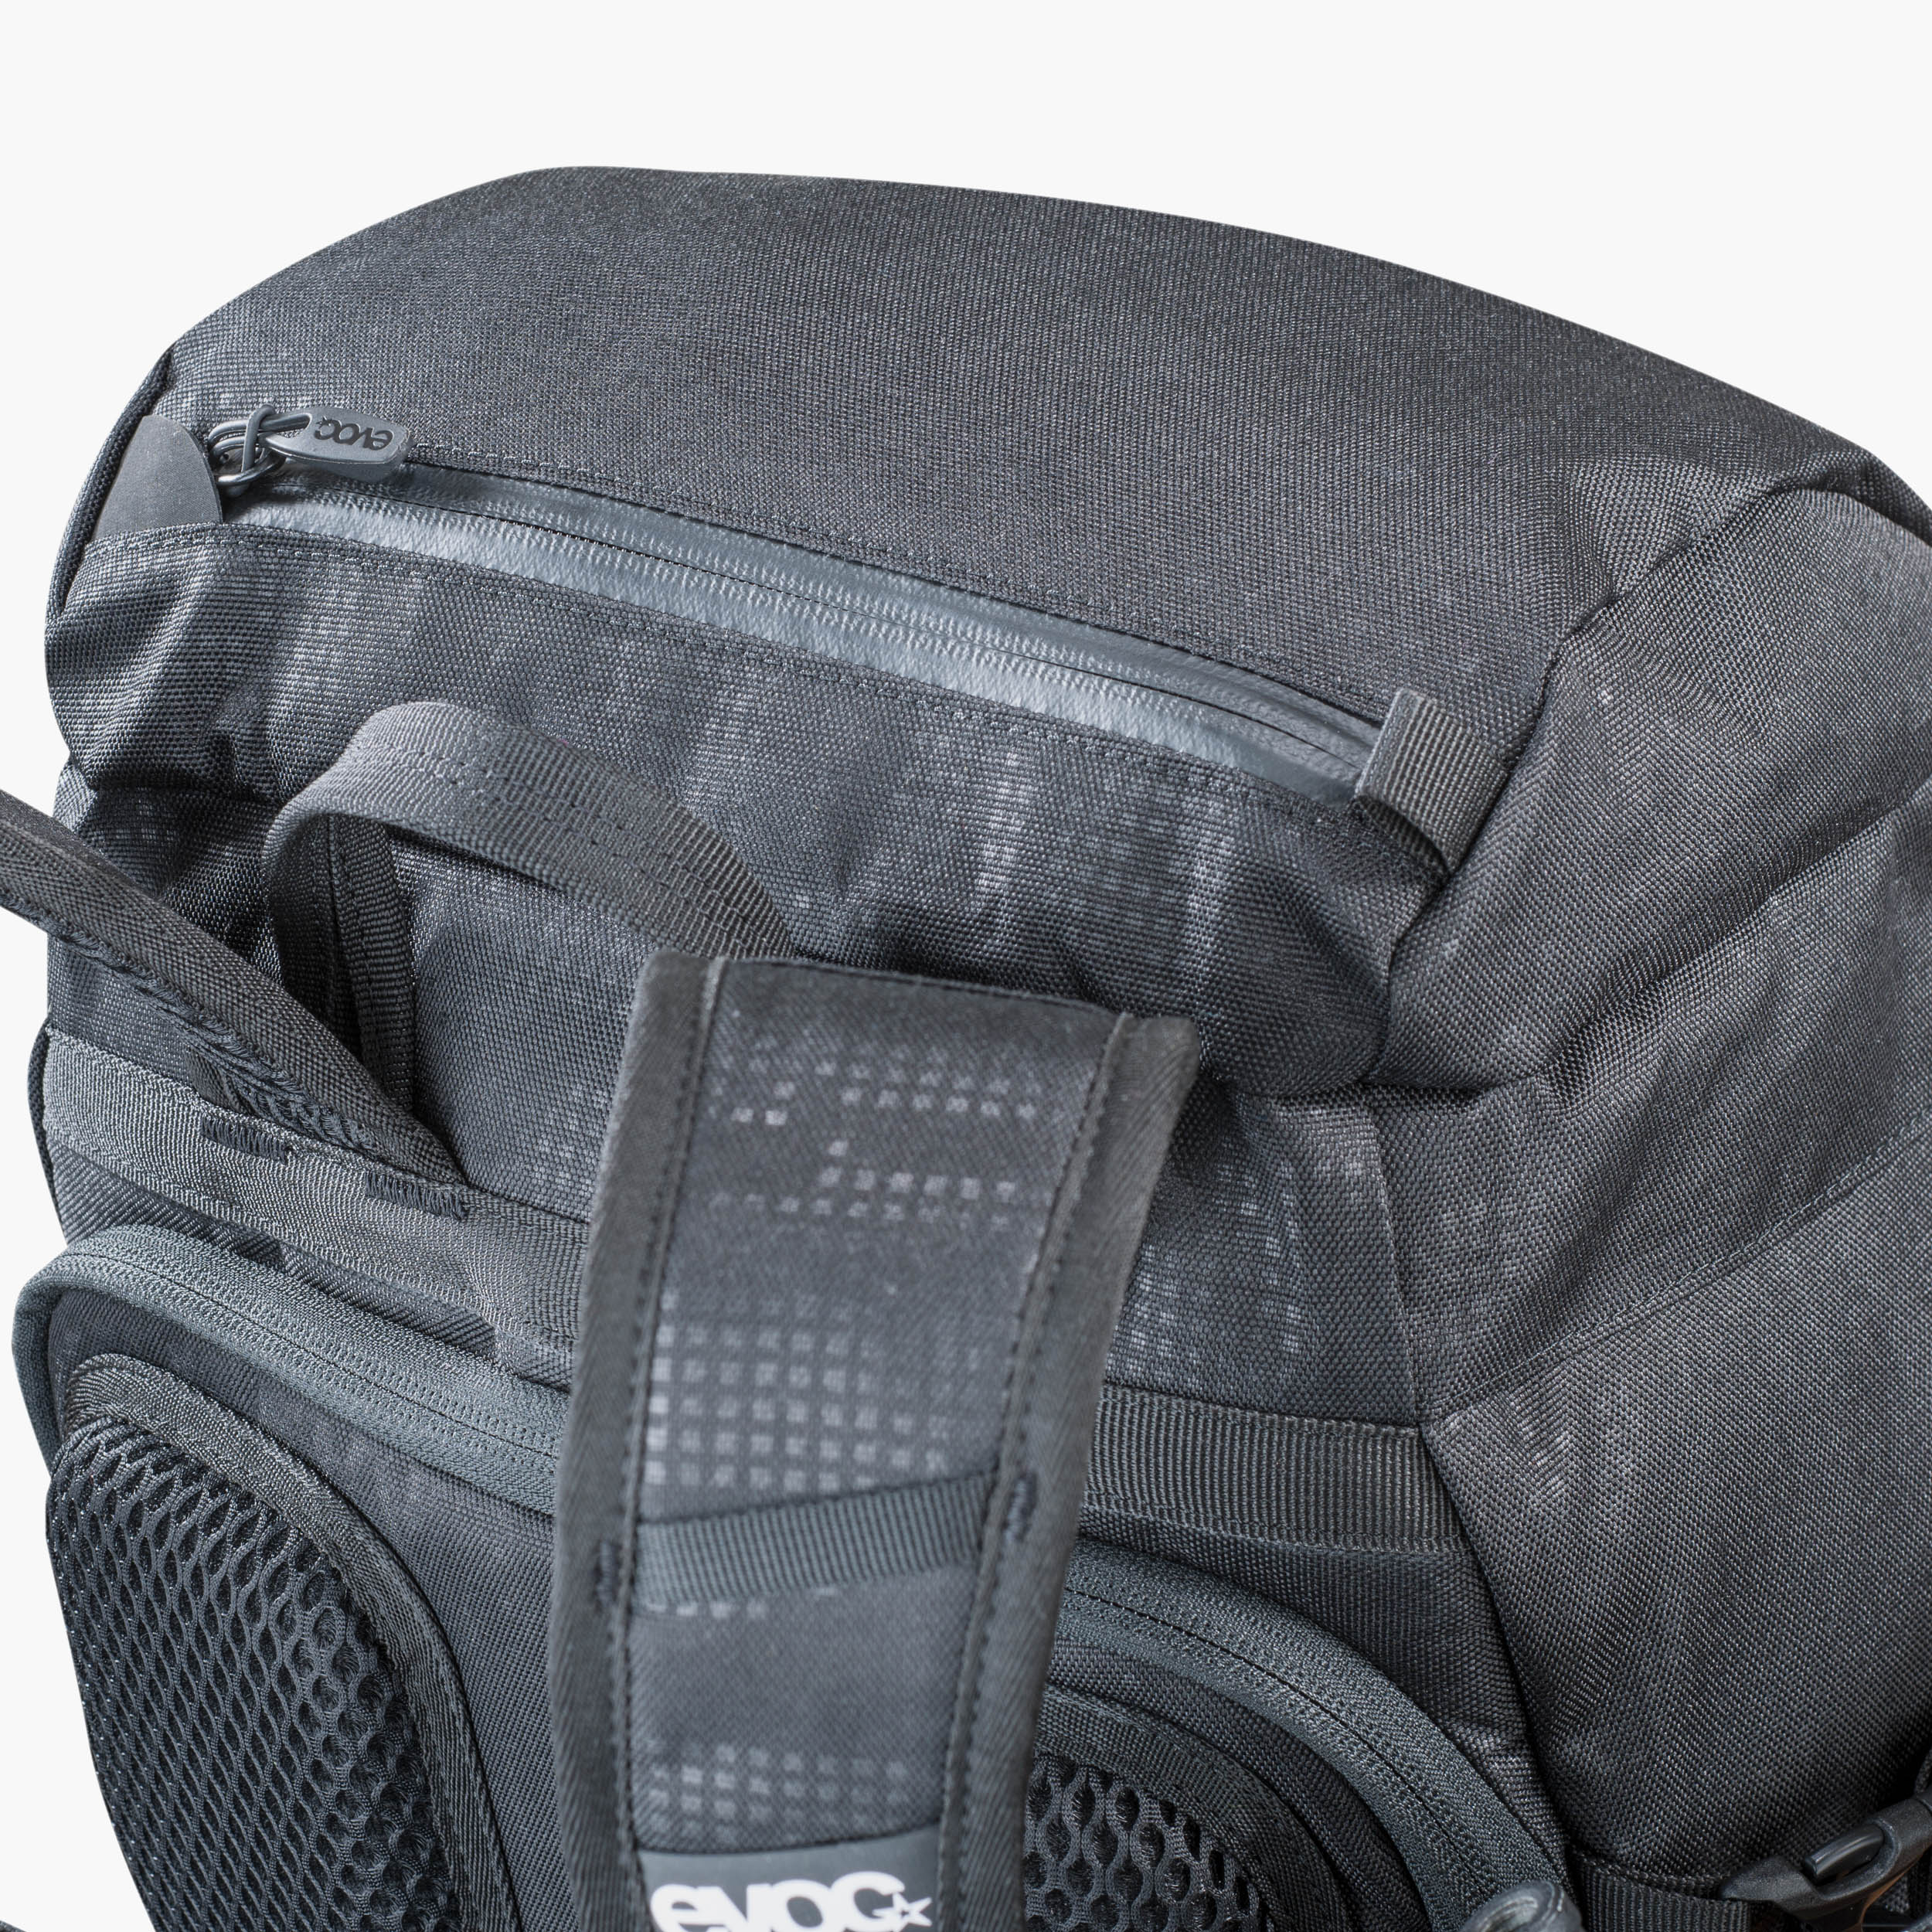 Review: Evoc Mission Backpack